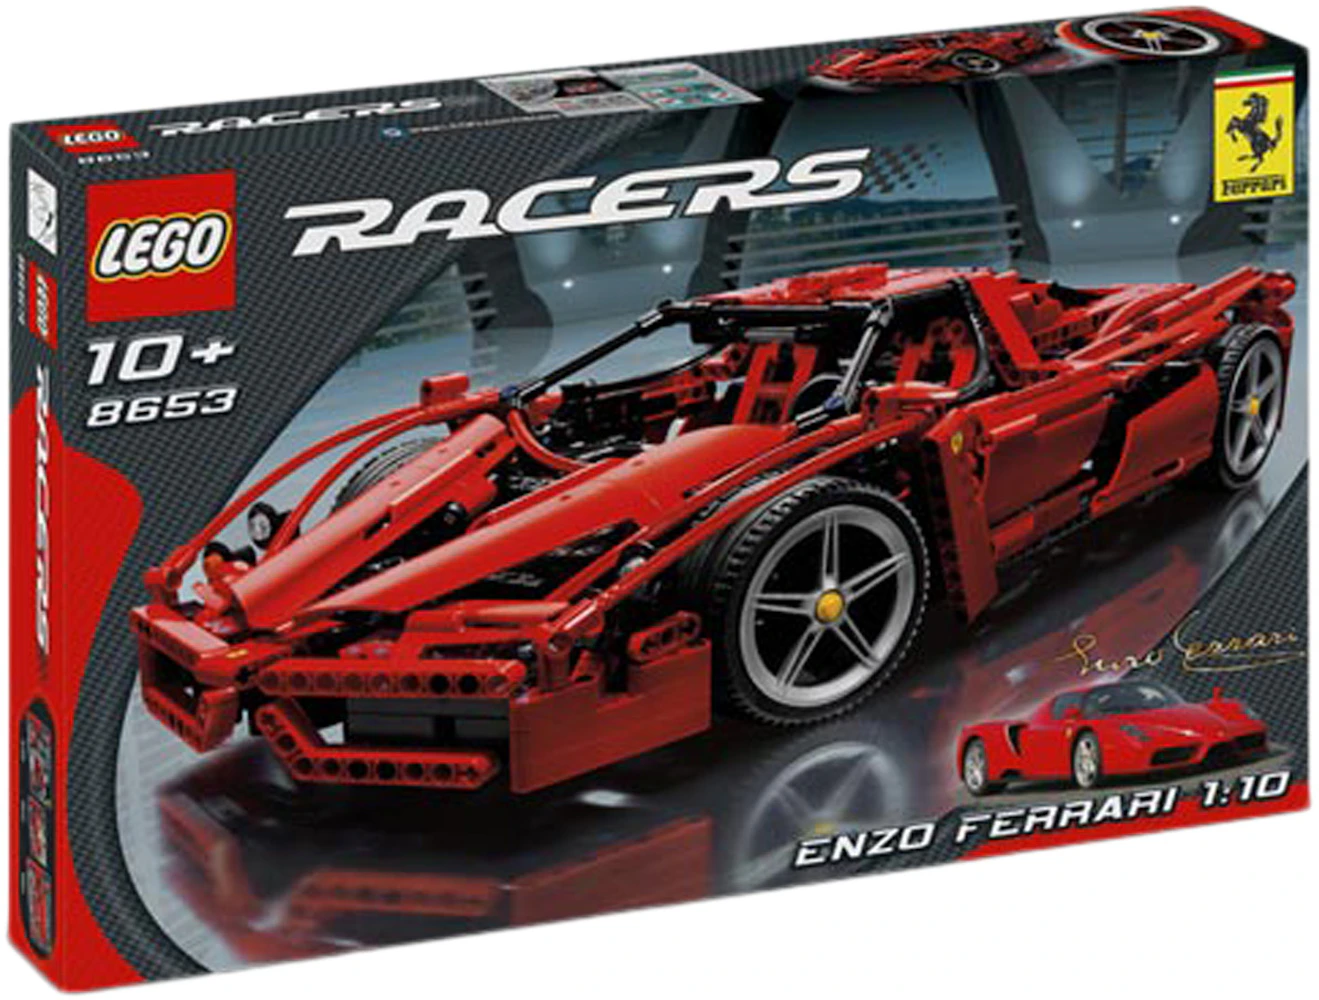 Racers Enzo Ferrari 8653 - US